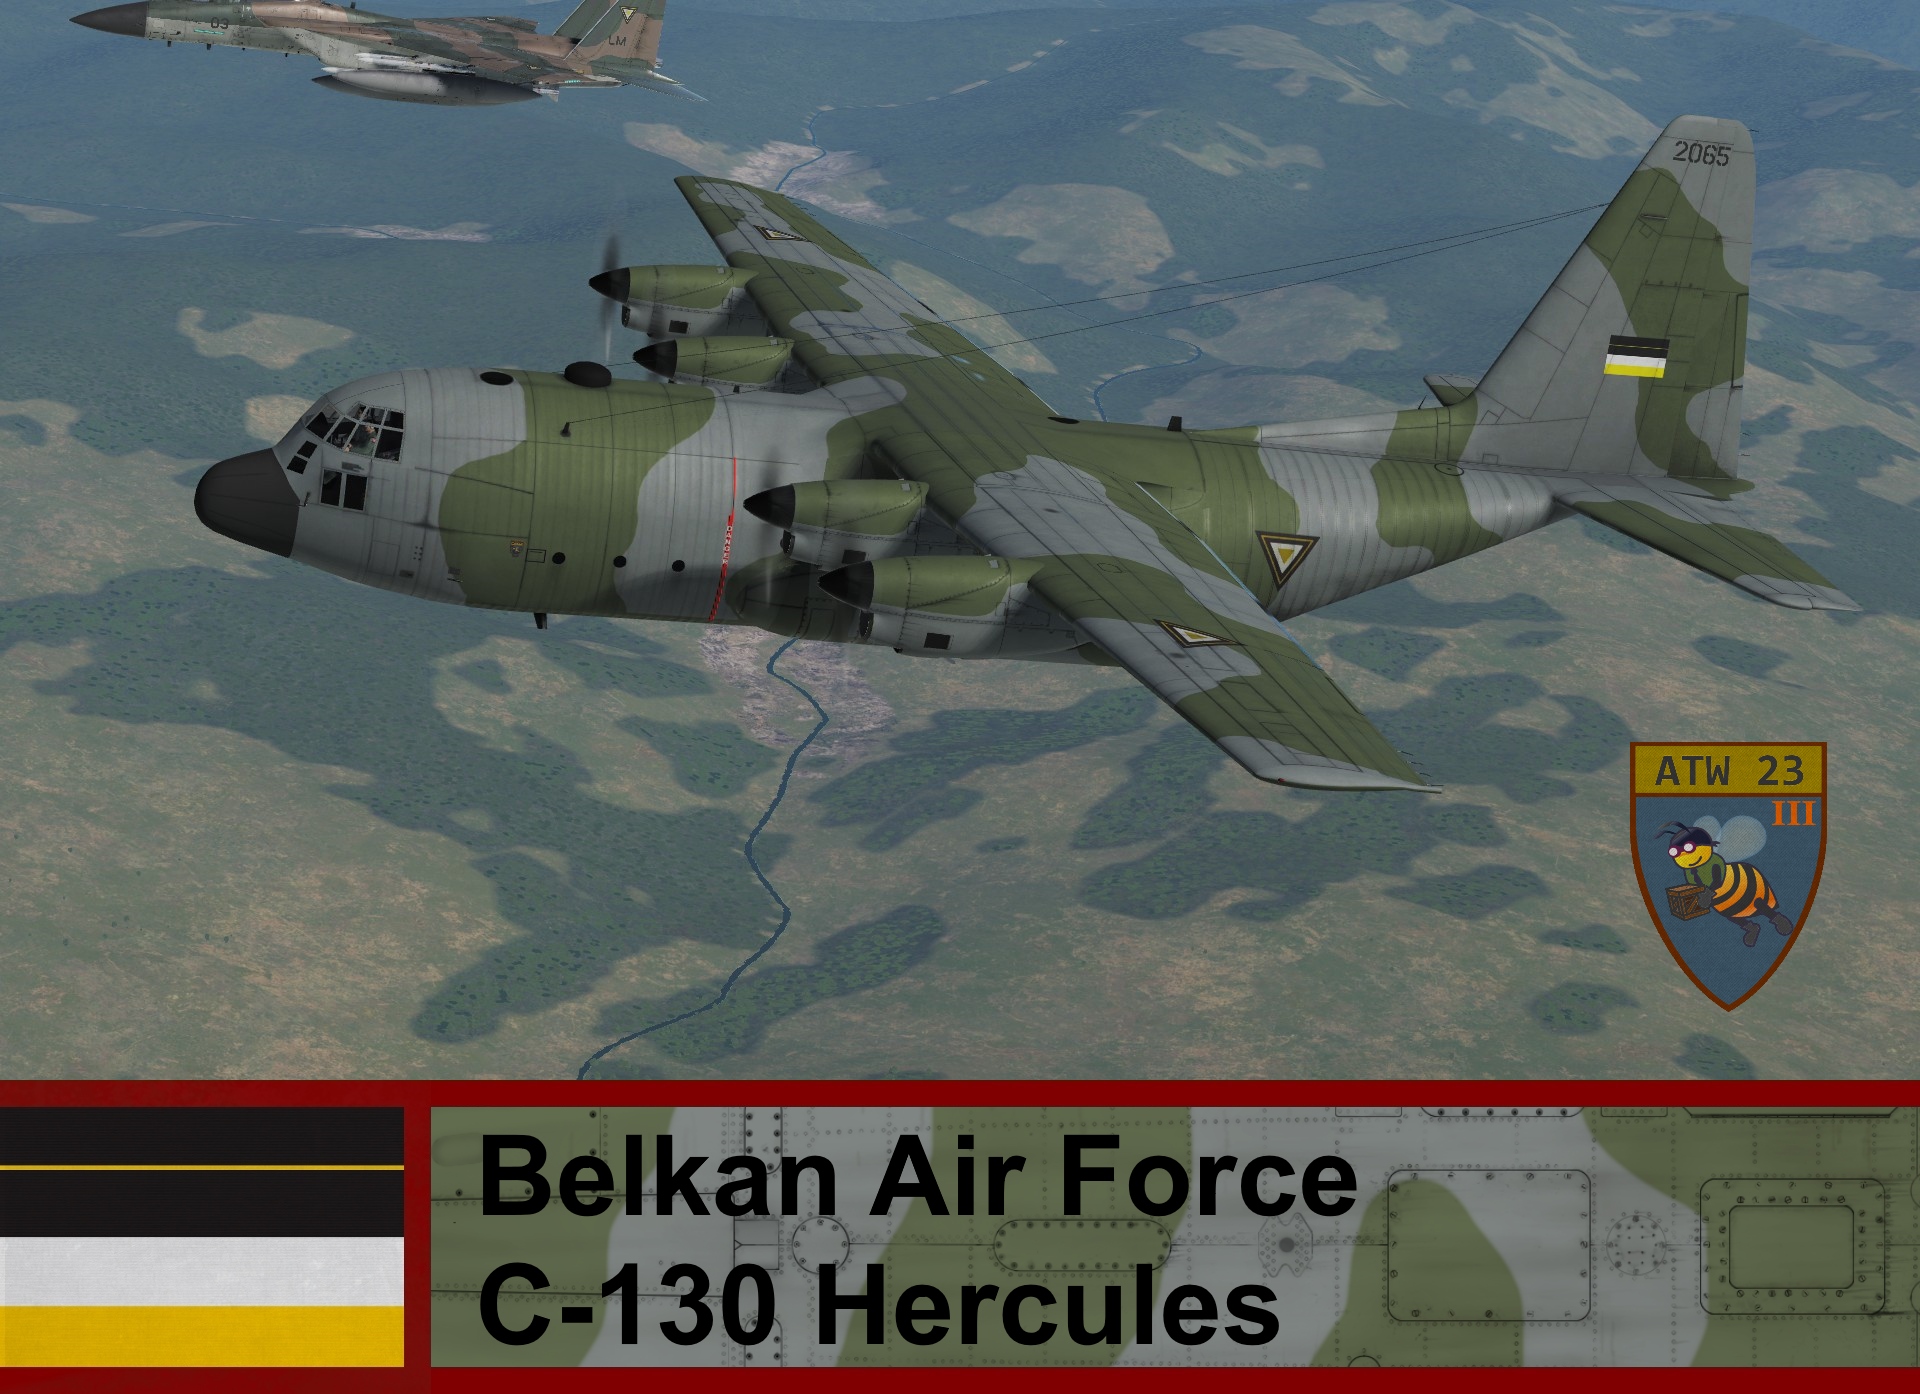 Belkan Air Force C-130 Hercules - Ace Combat Zero (32nd ATW) Cpt. Georg Spitzer